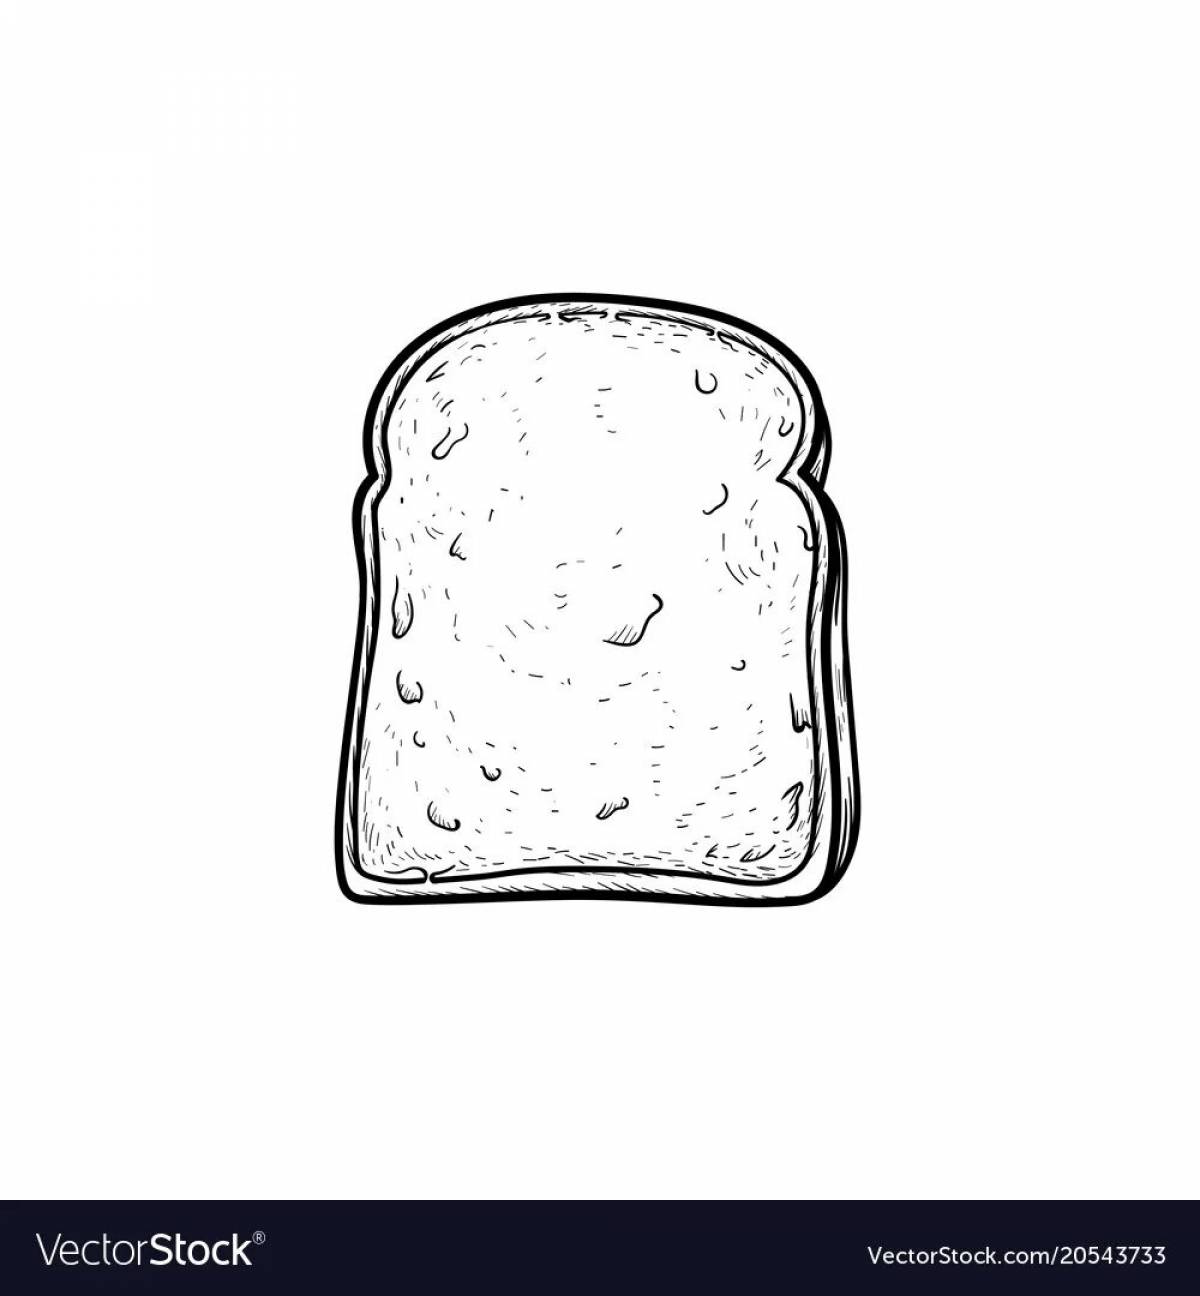 Coloring flaky-crisp slice of bread